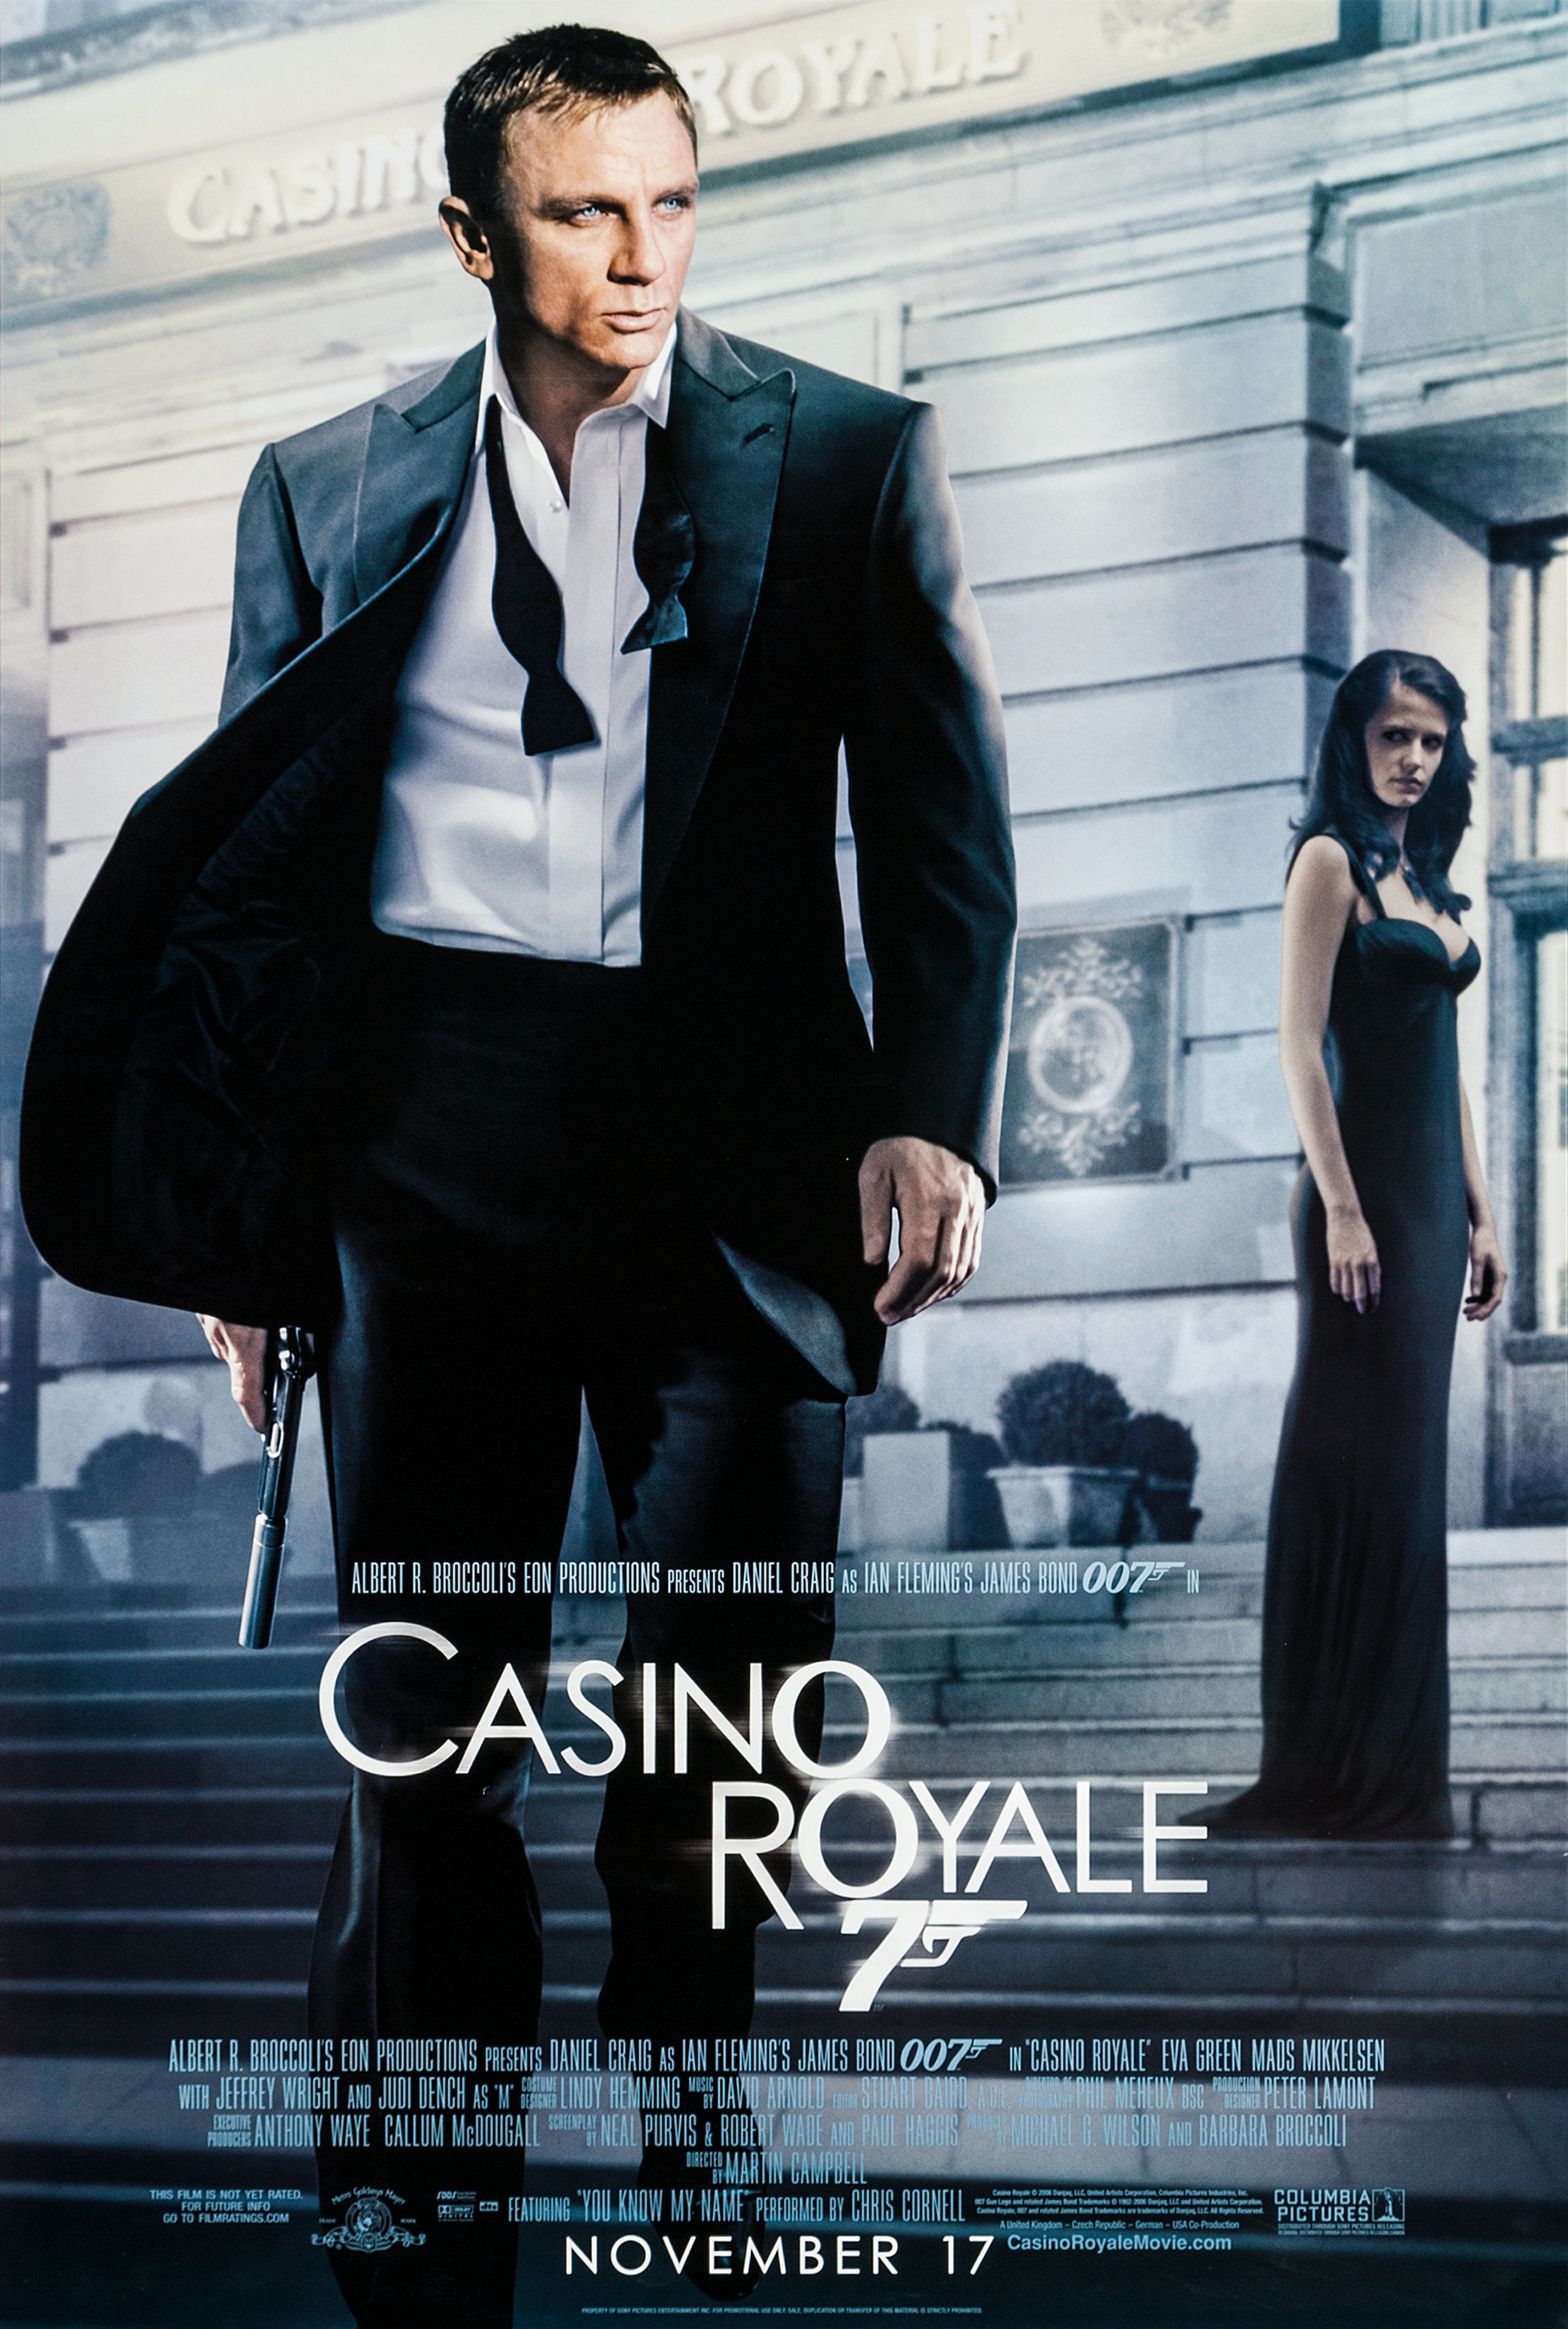 Casino Royale (film) | James Bond Wiki | Fandom